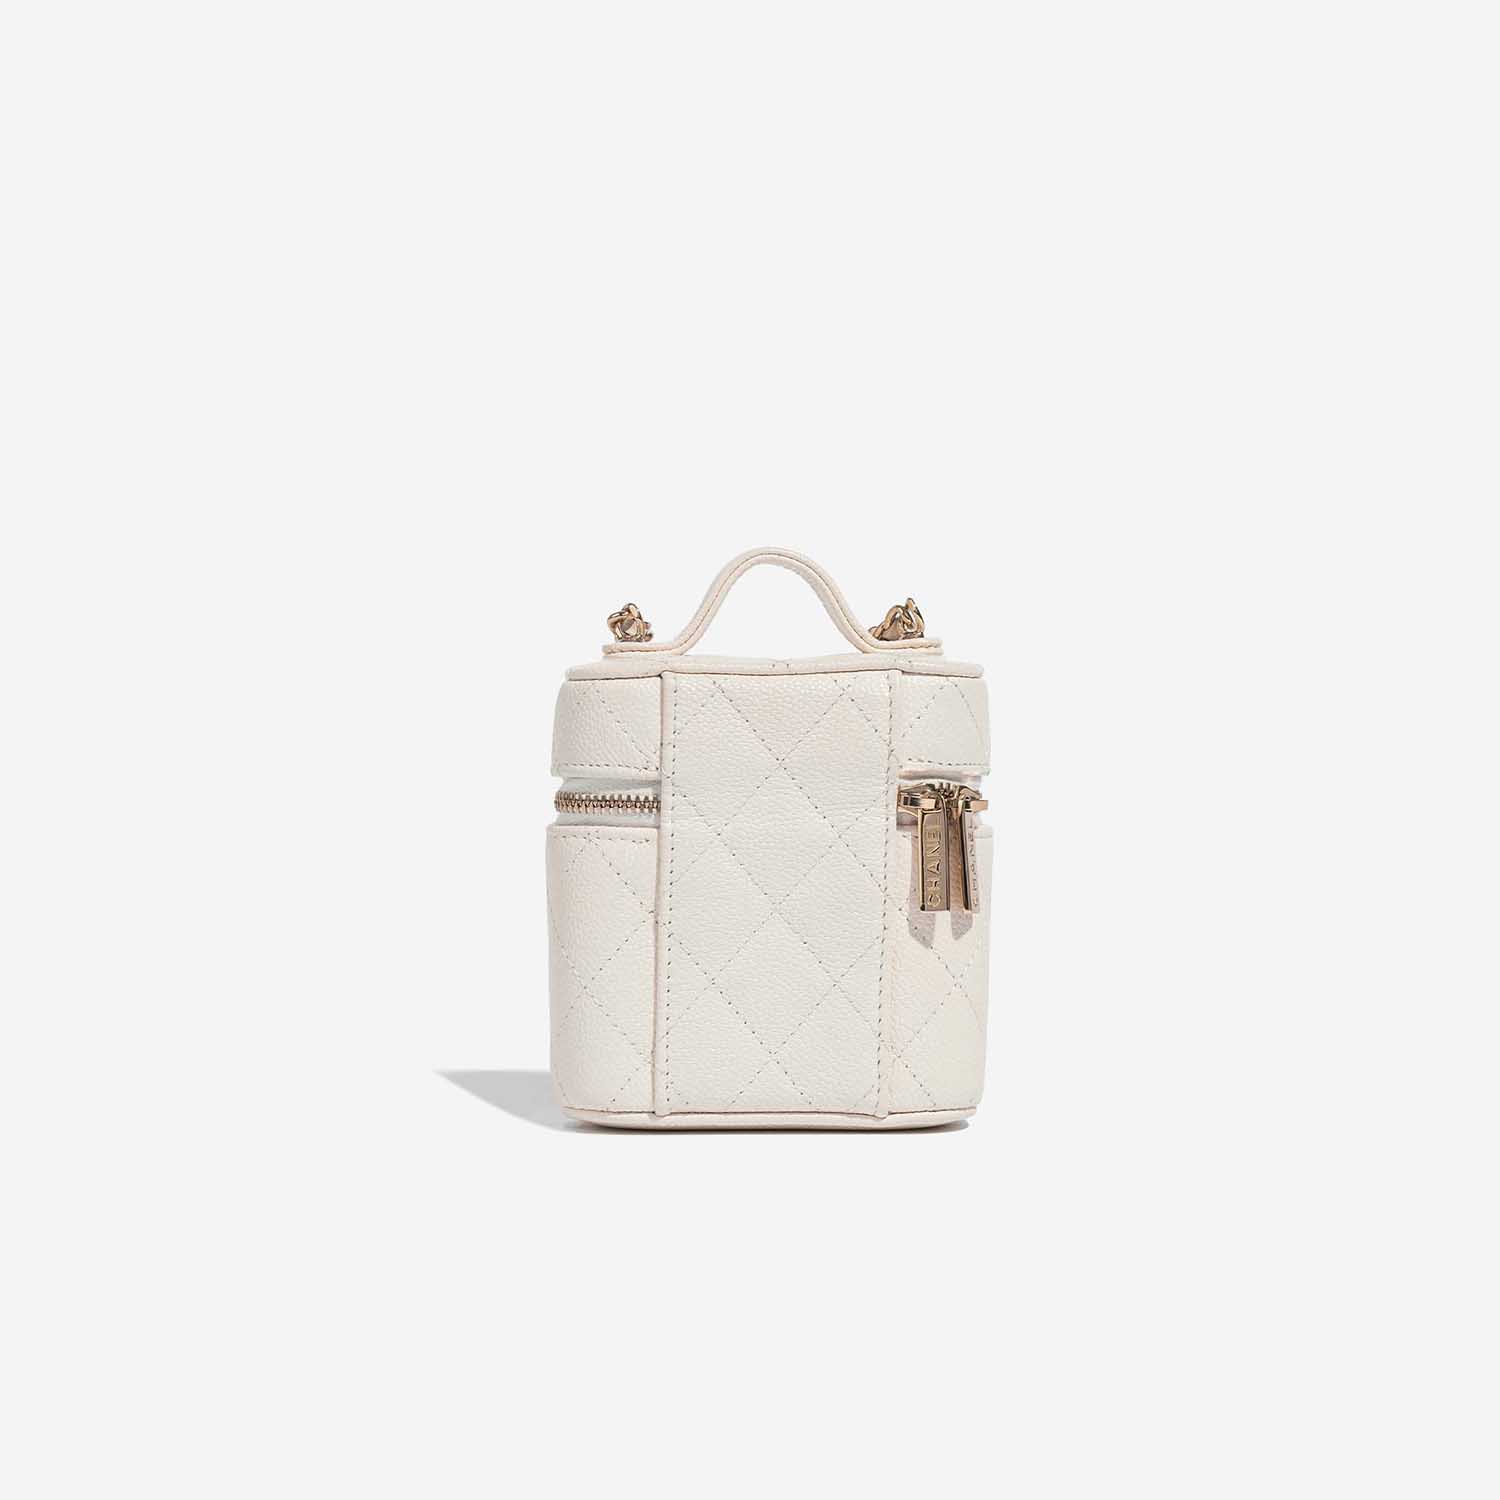 Pre-owned Chanel bag Vanity Mini Caviar White White Back | Sell your designer bag on Saclab.com